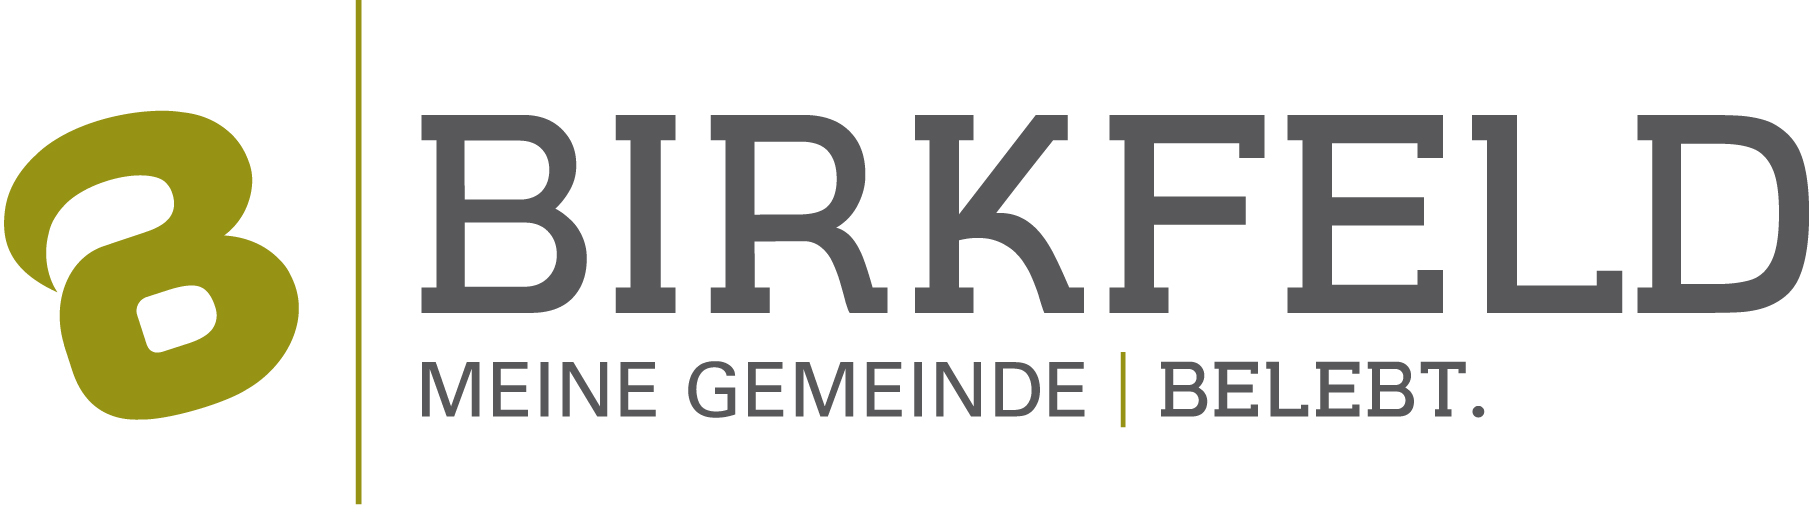 MG Birkfeld Logo.jpg